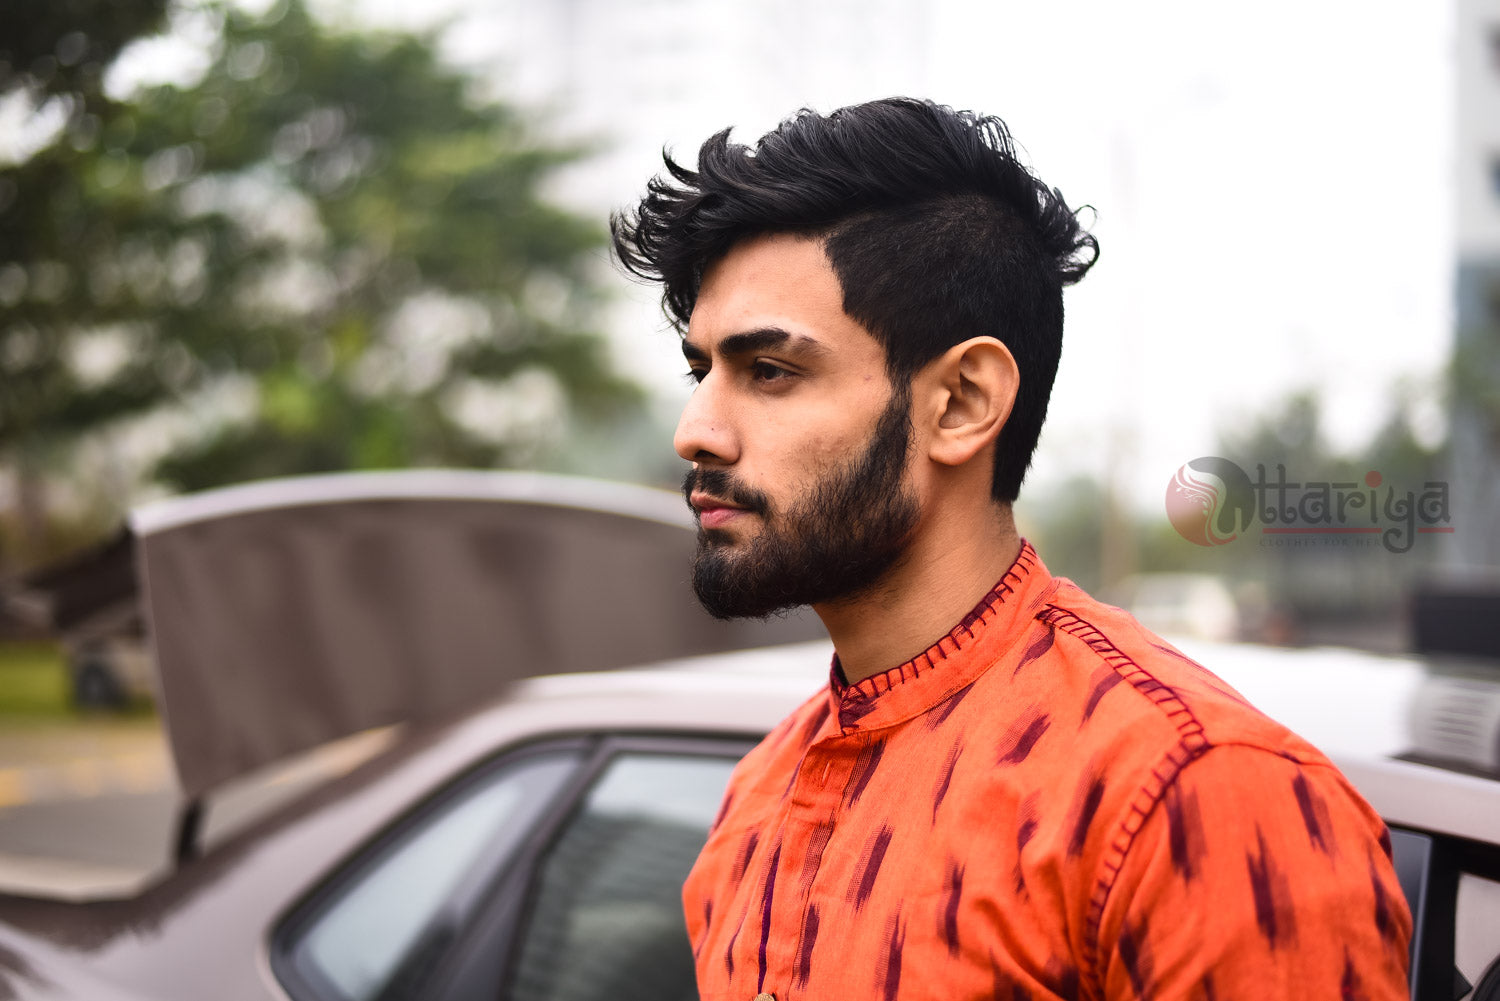 Orange Handloom Cotton Shirt - Uttariya